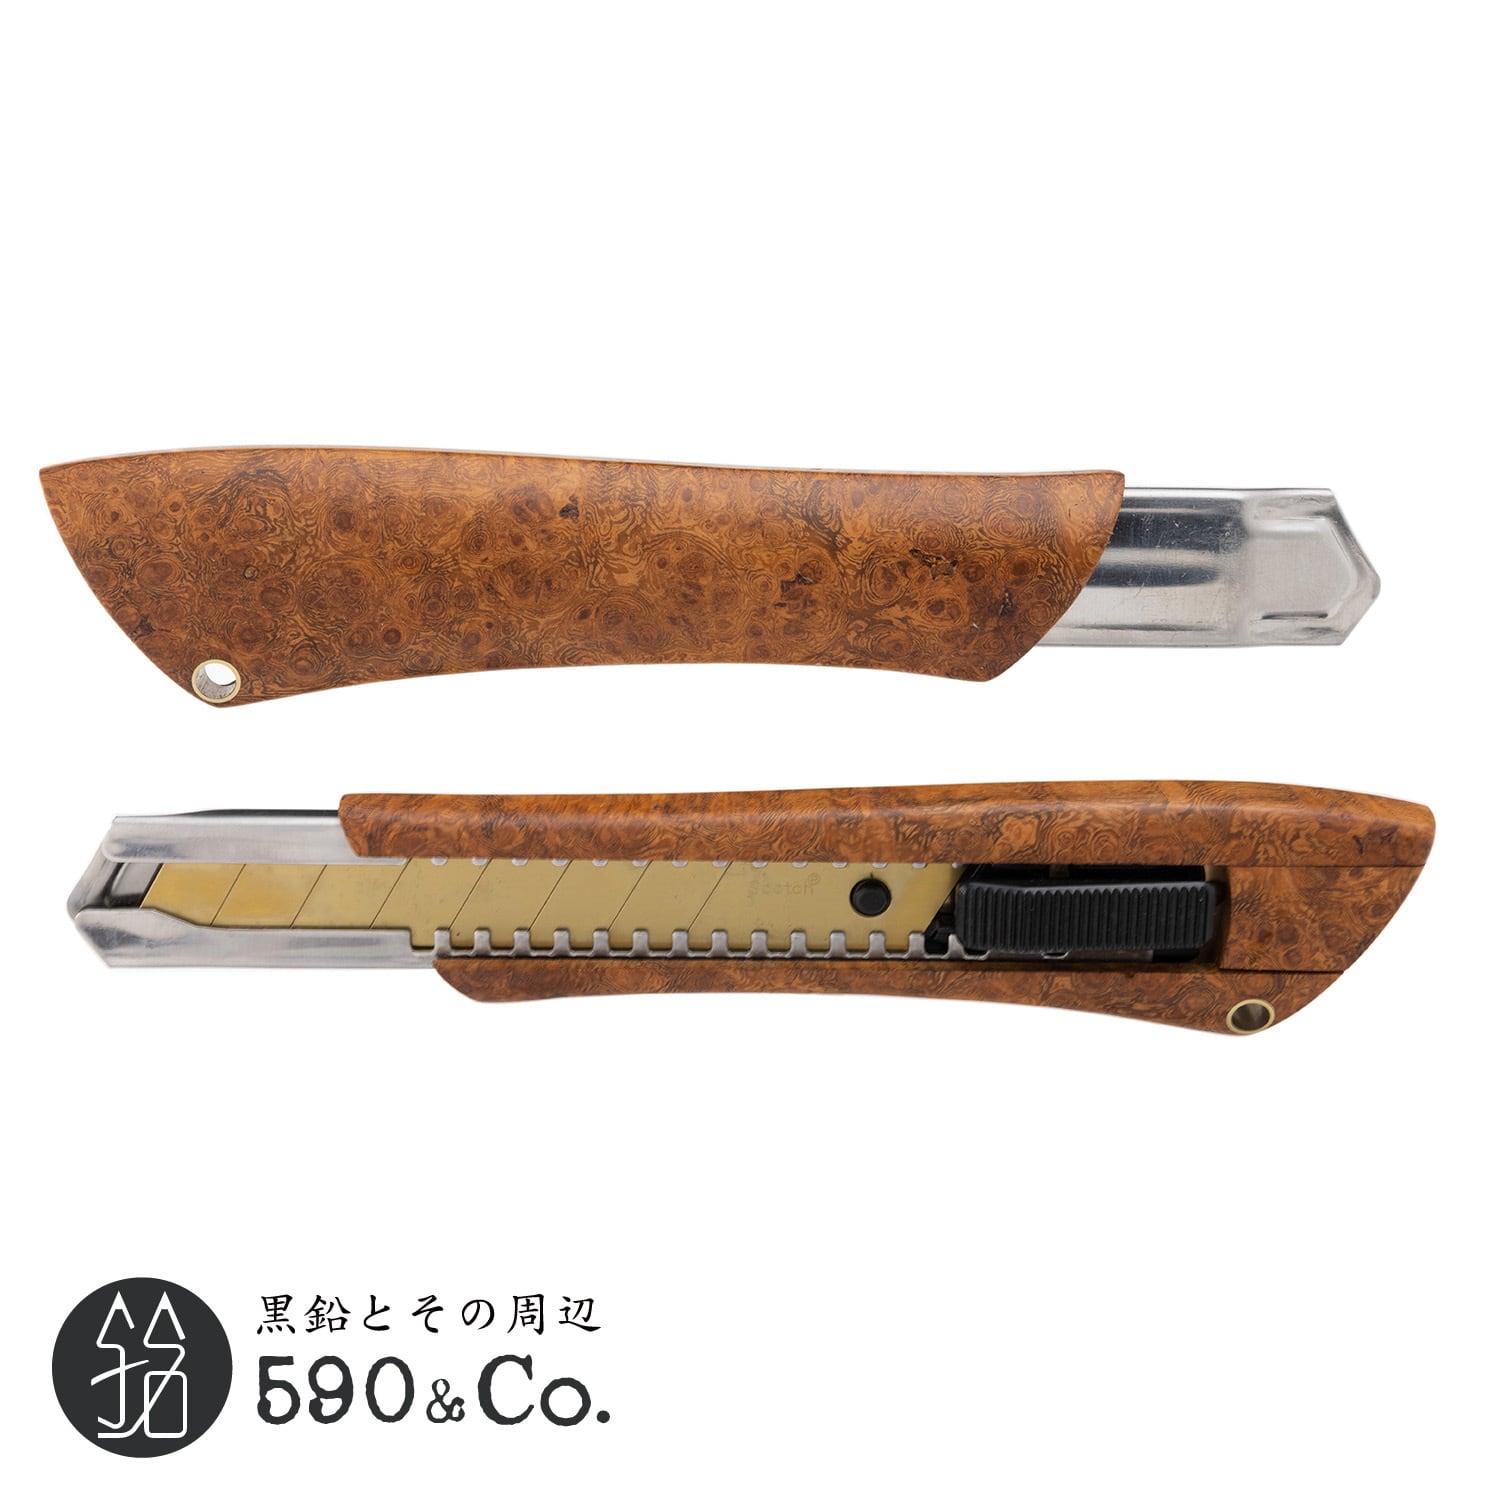 Flamberg/フランベルク】木製カッターナイフL型 (花梨瘤杢) B | 590&Co.